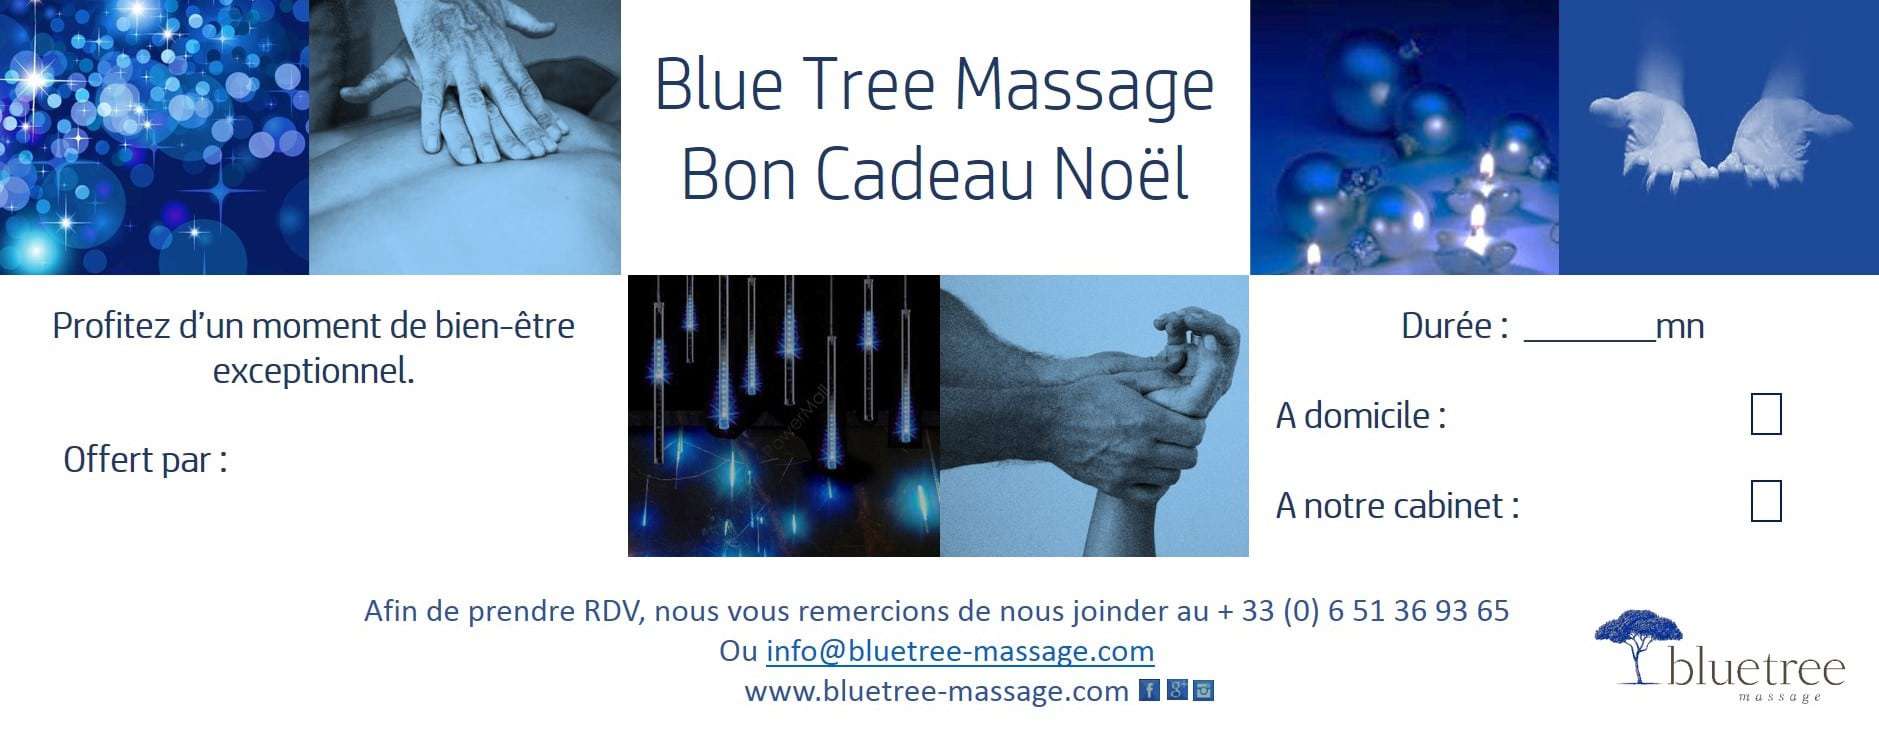 bon-cadeau noel BLUE TREE MASSAGE